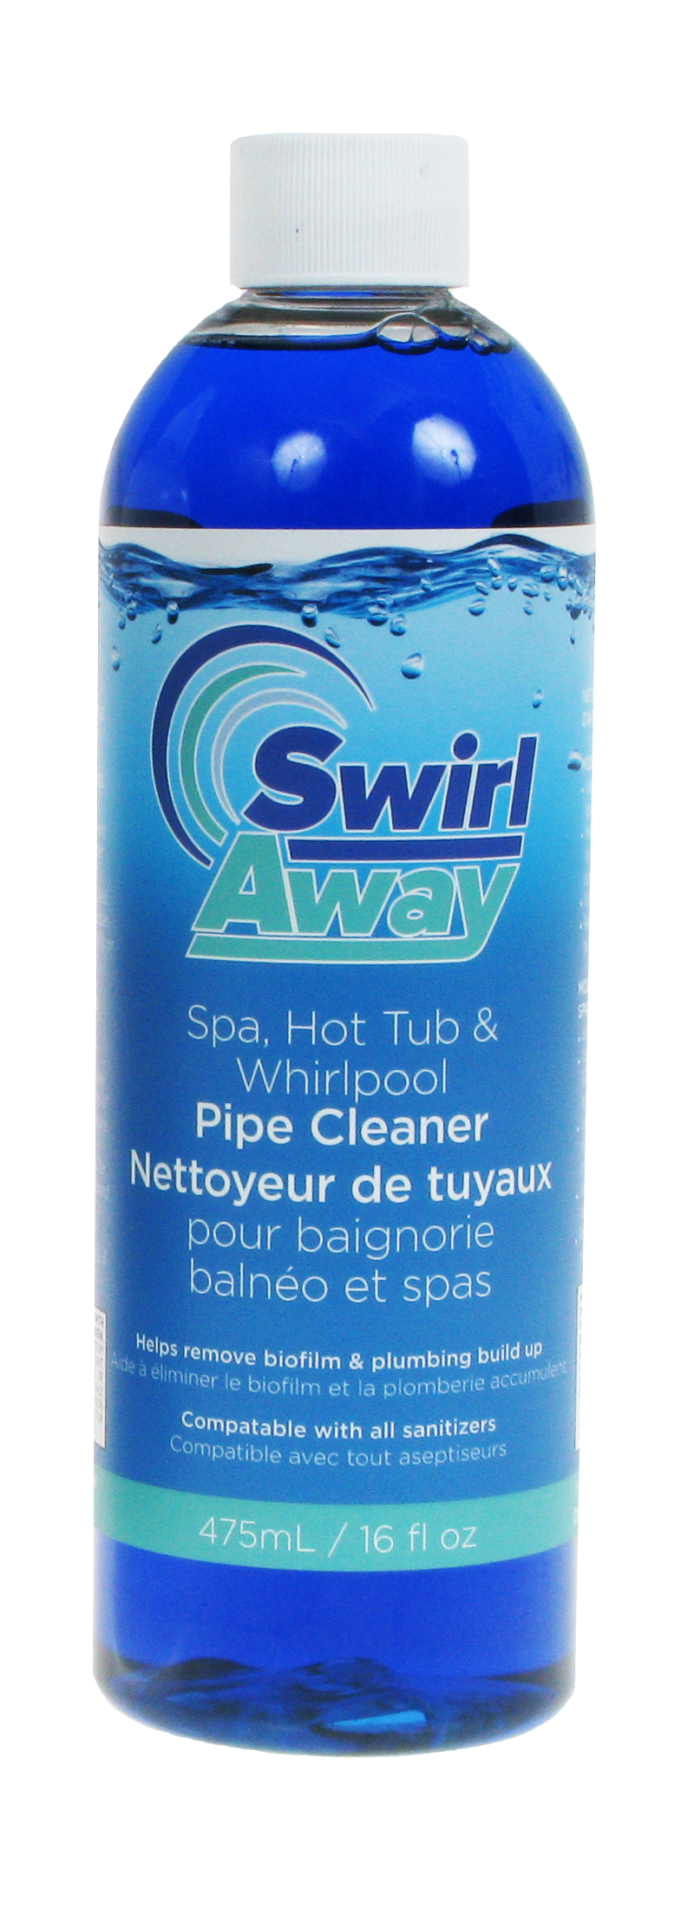 Swirl Away Pipe Cleaner 475ml - SWIRL AWAY - 475ml